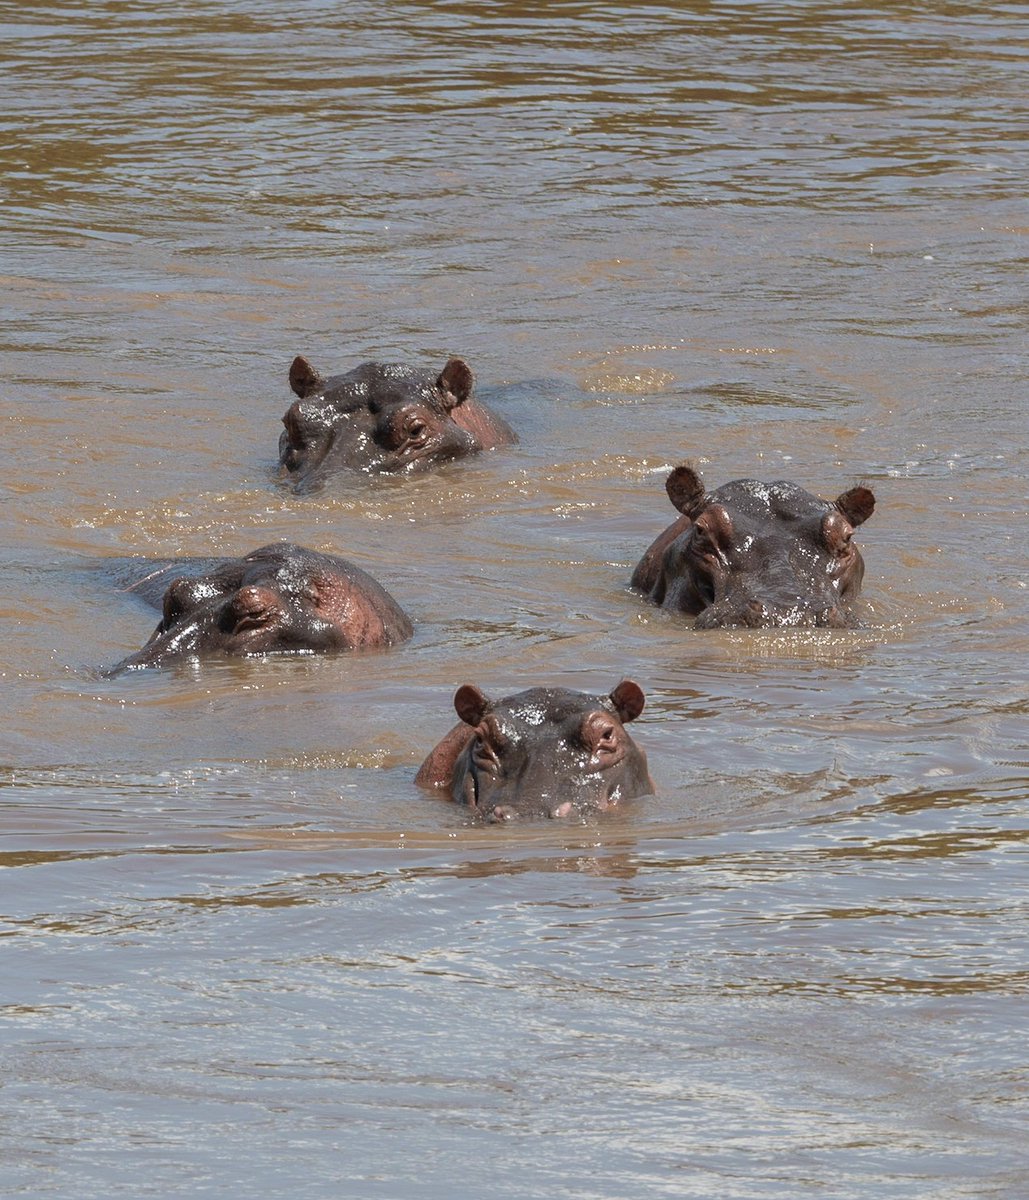 Kenya Safari Series. Mara River - Hippo synchronised swimming team 
#Kenya #ThePhotoHour #BBCWildlifePOTD #TwitterNatureCommunity #TwitterNaturePhotography #popphotooftheday  #naturelovers  #photographylovers #PhotoMode  #masaimara @AMAZlNGNATURE #Hippo @KWSKenya @kenyadirect